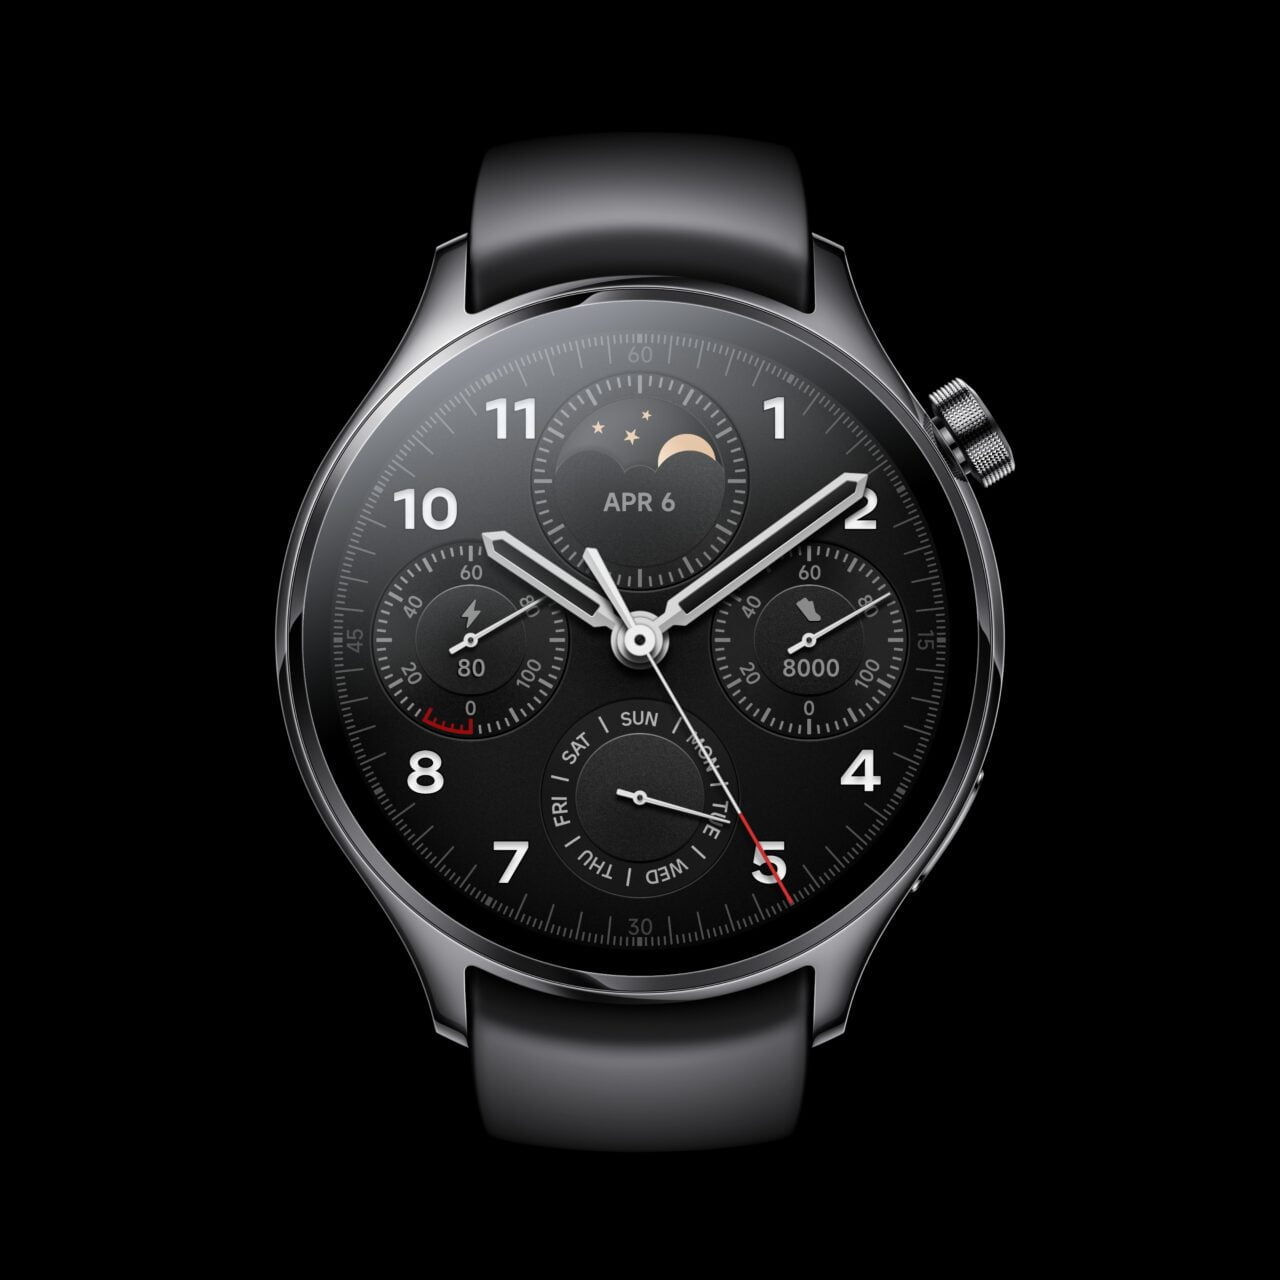 xiaomi watch s1 pro premiera android com pl scrm003